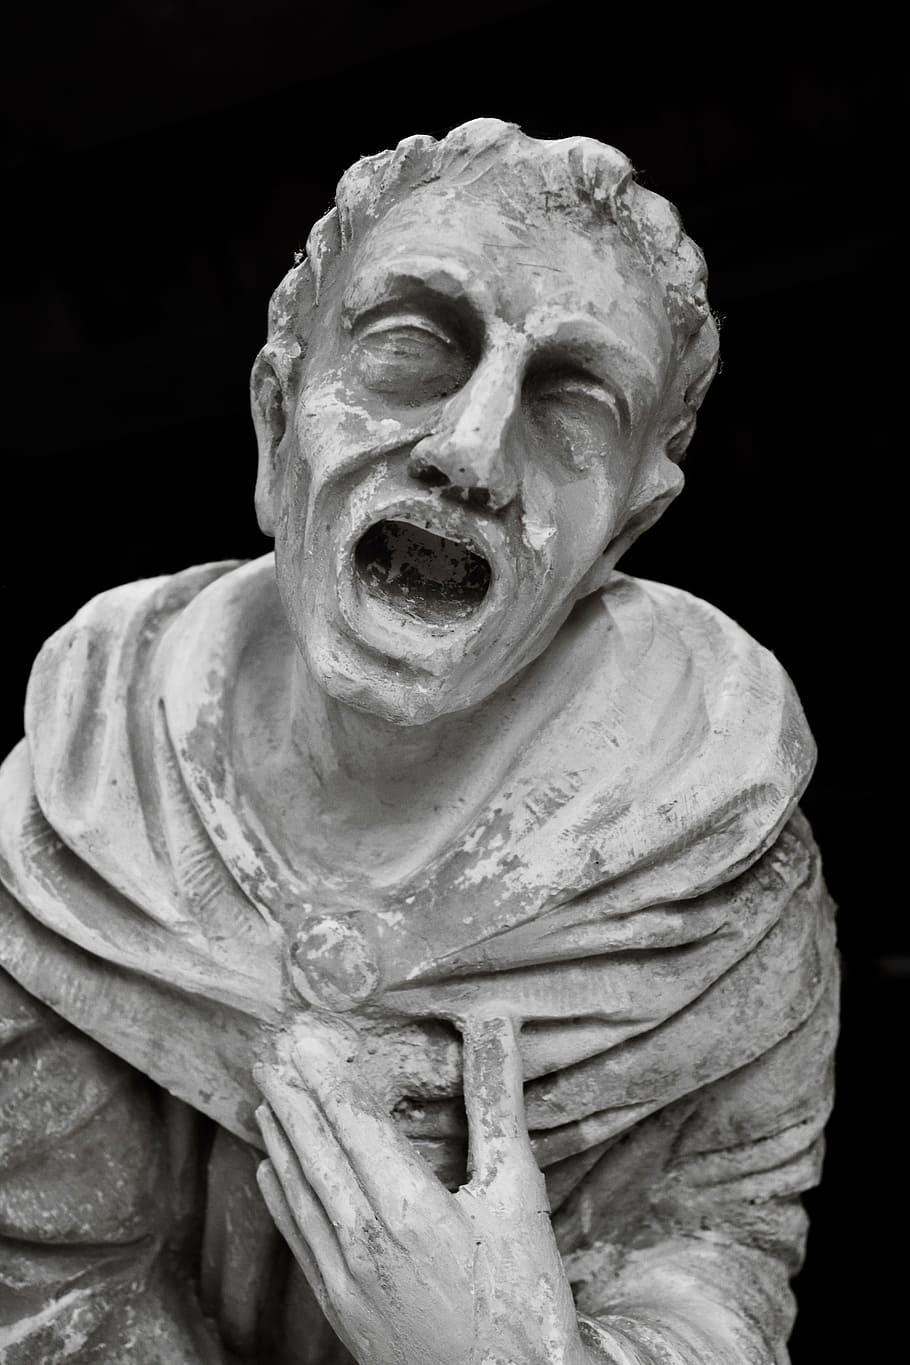 estatua de piedra, gritos, hombre, llanto, miedo, desesperación, dolor, humano, horror, depresión